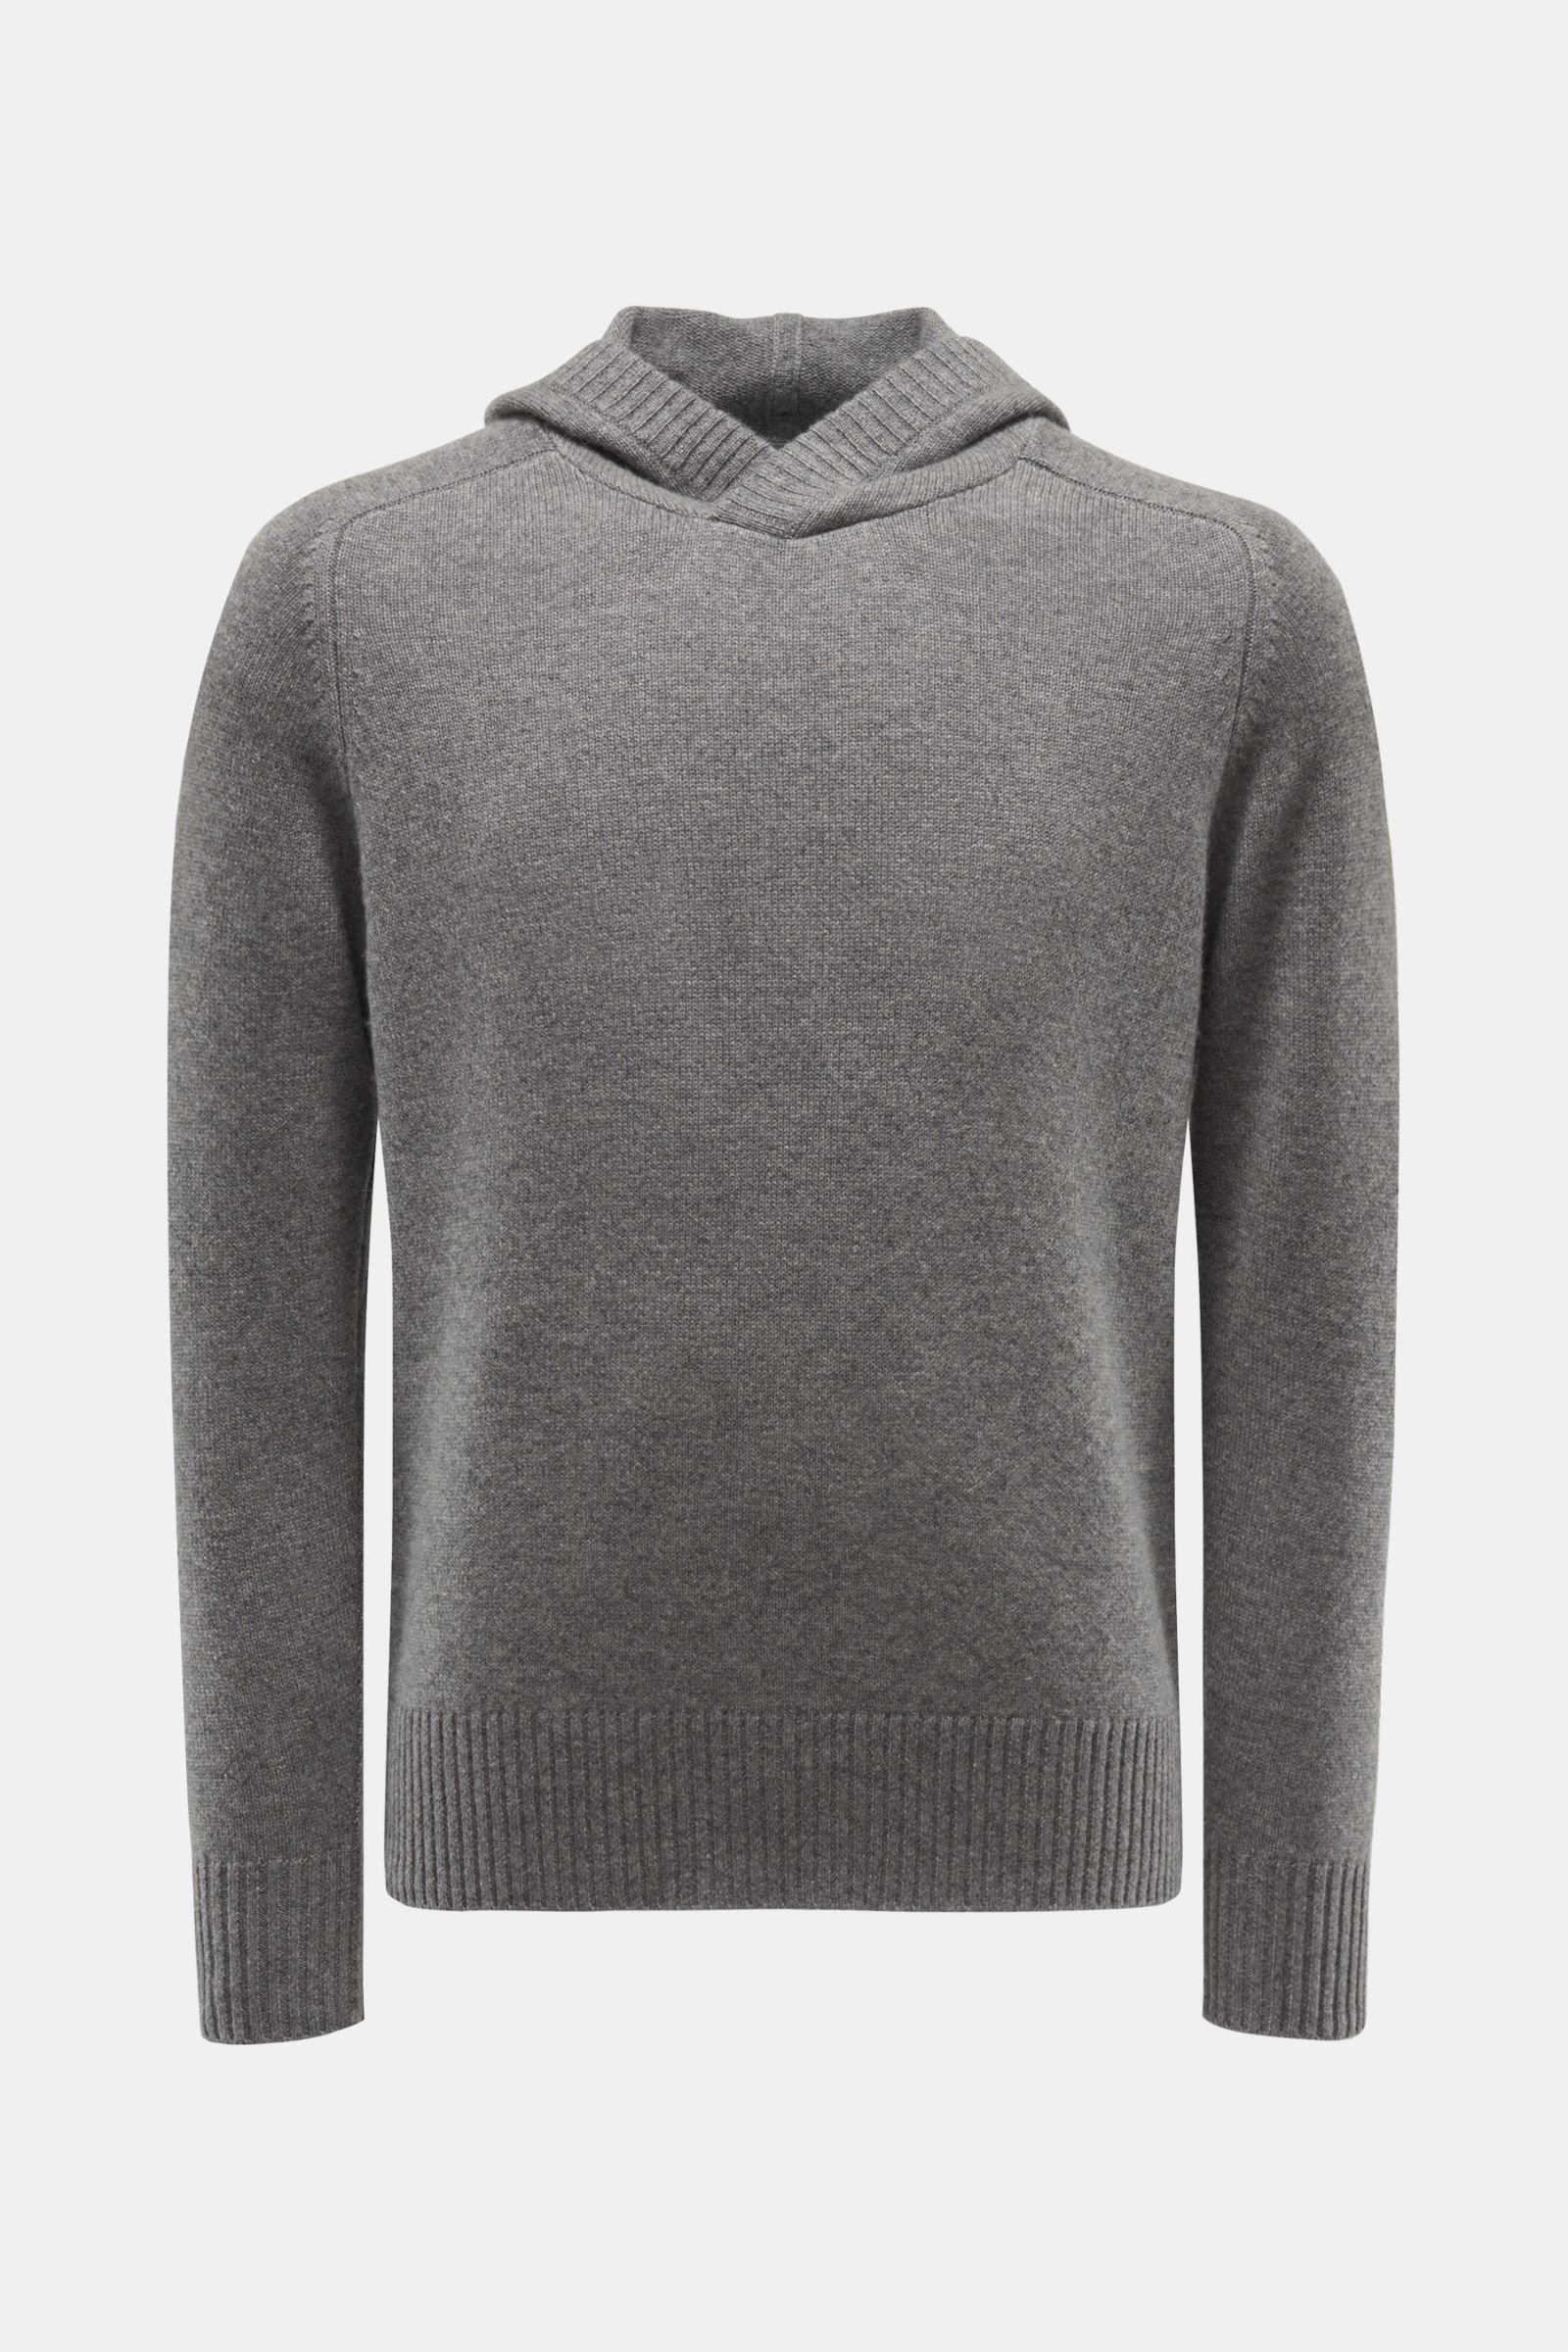 Cashmere hooded jumper grey